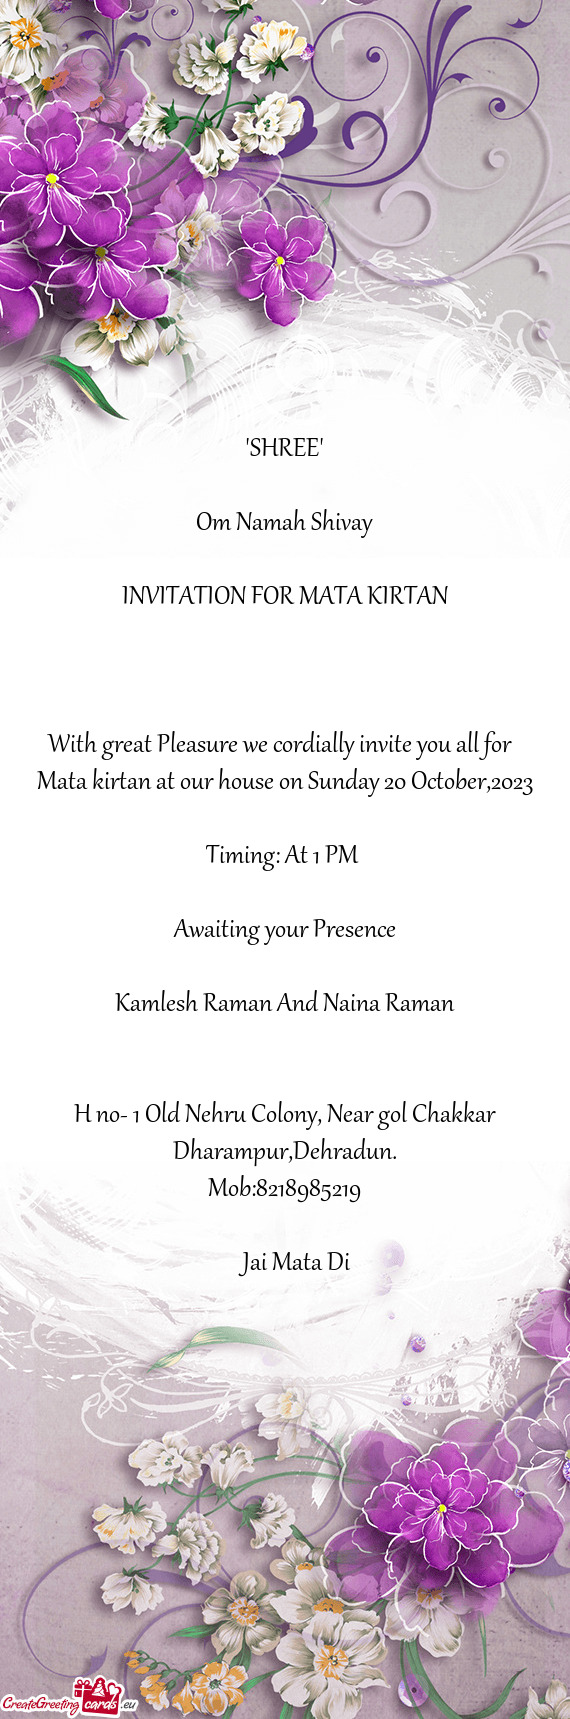 Mata kirtan at our house on Sunday 20 October,2023